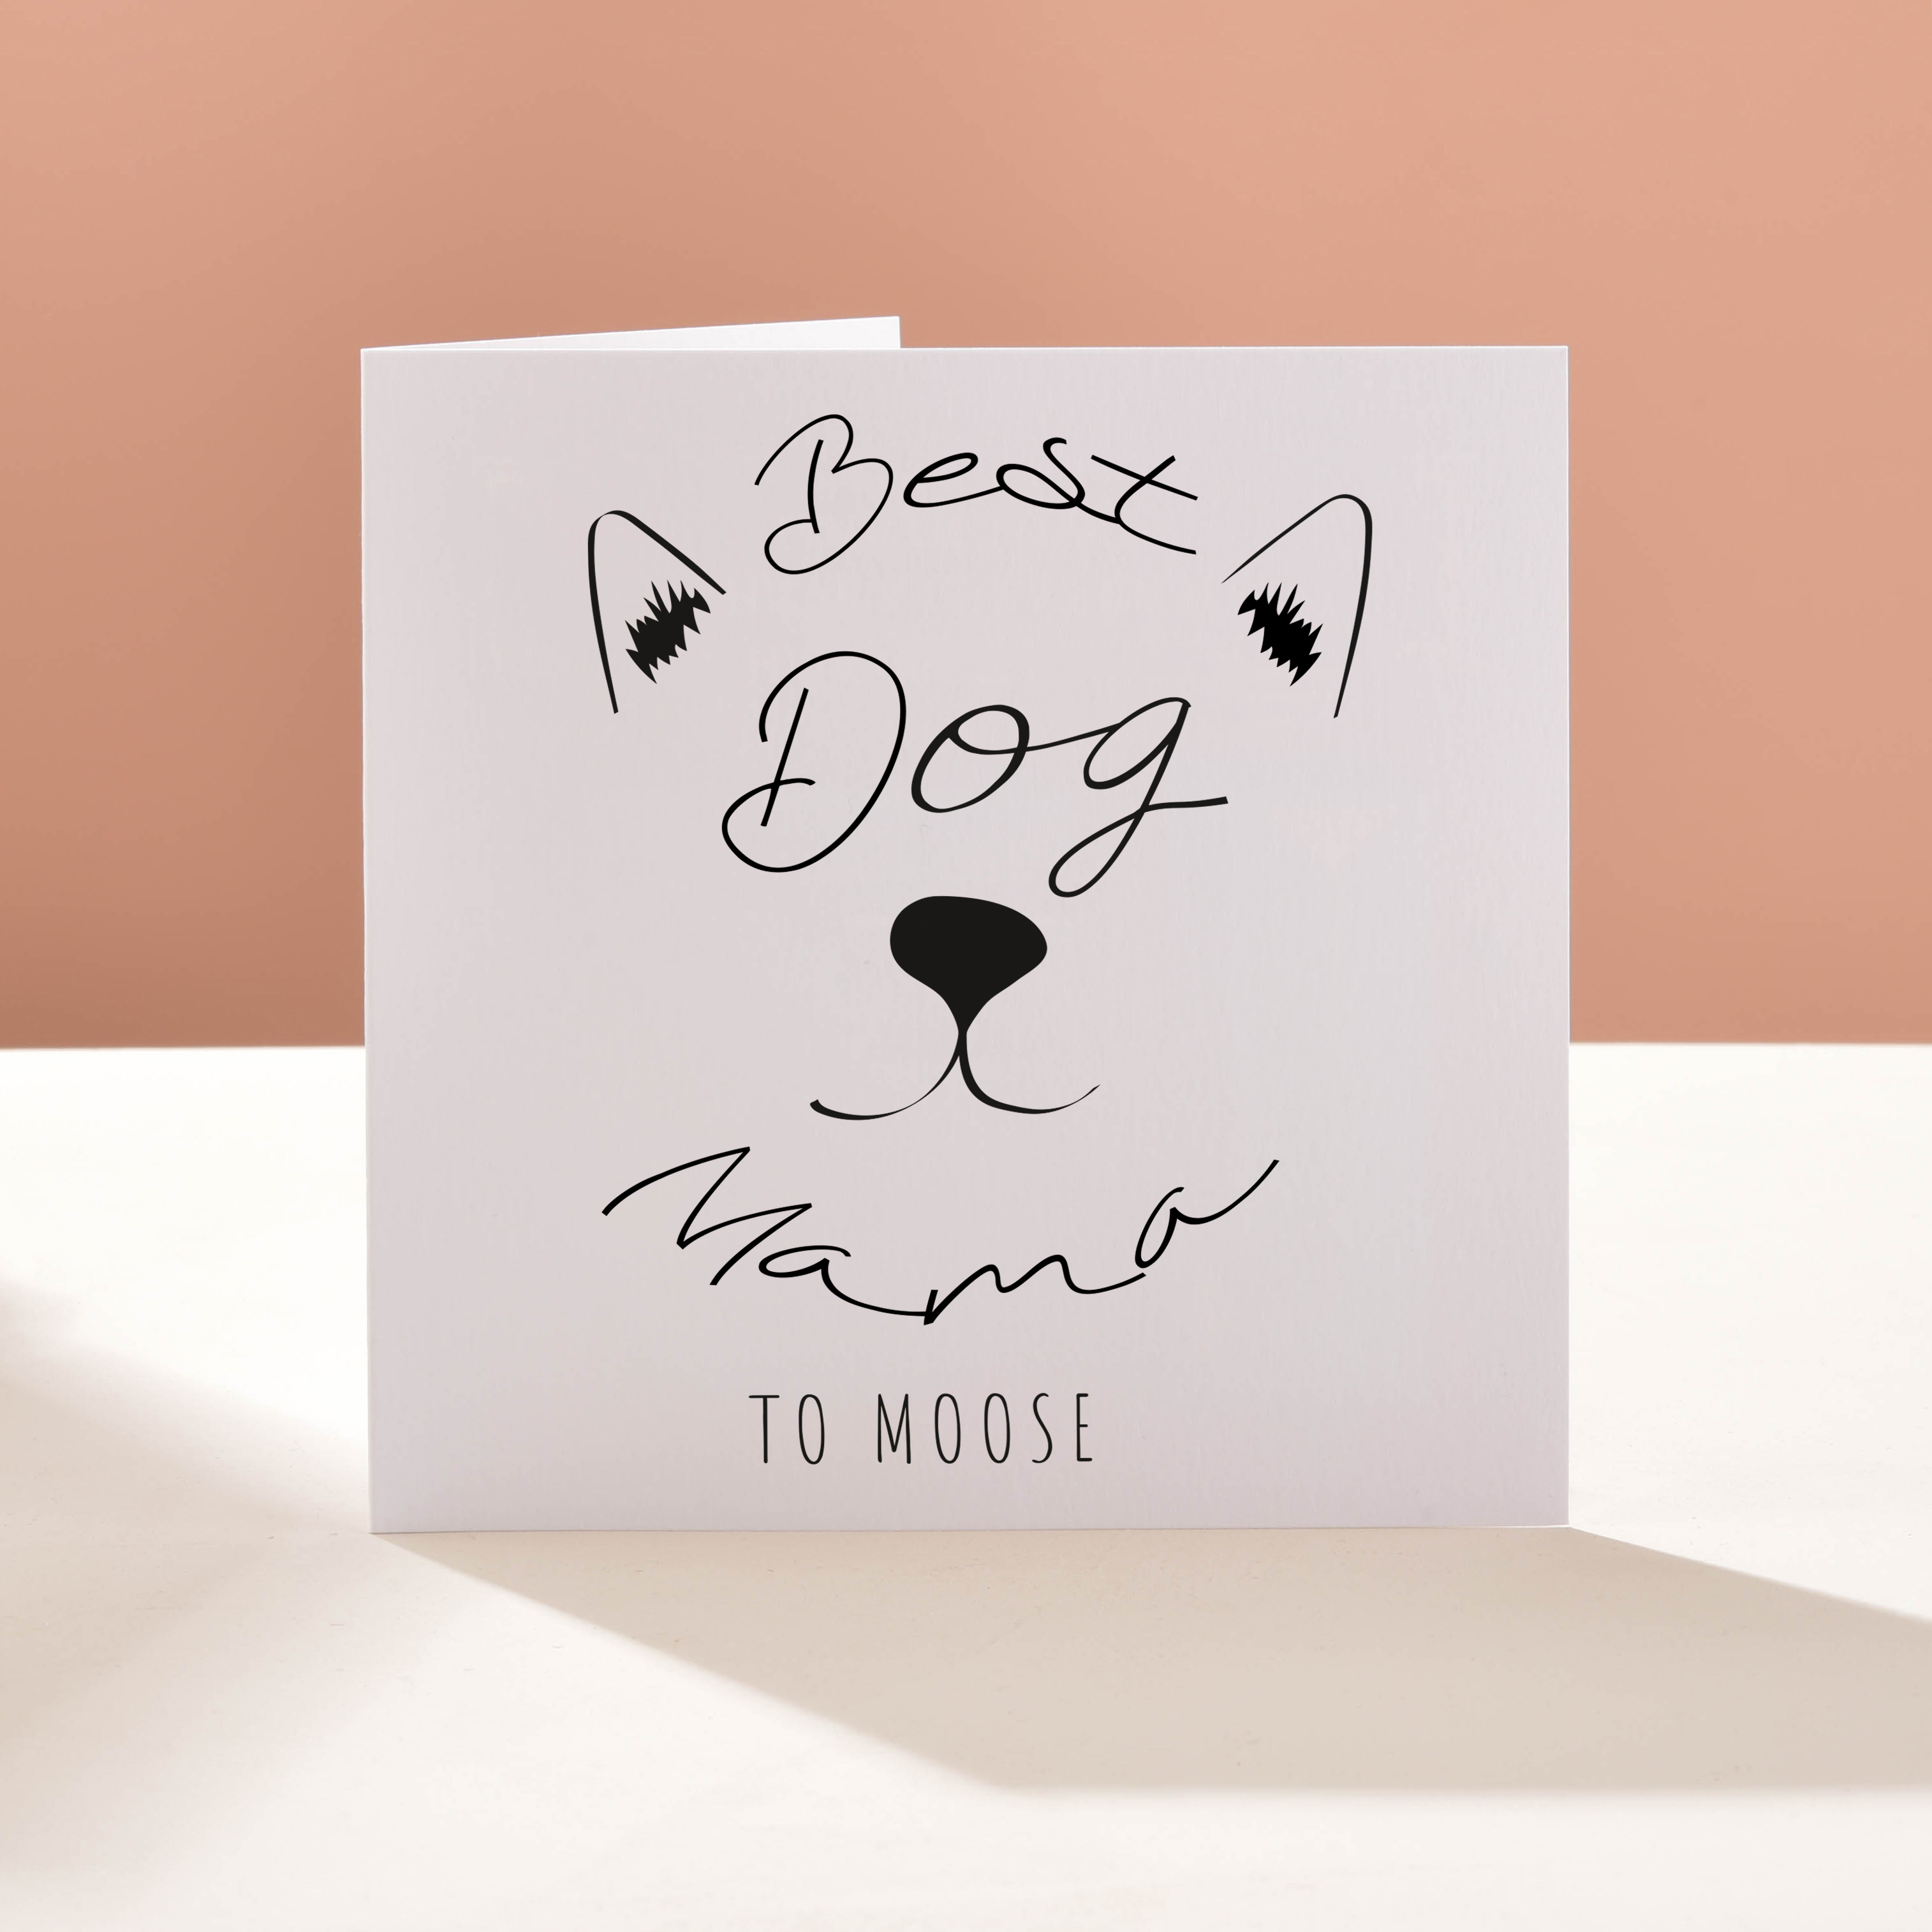 Personalised Card - Best Dog Mama